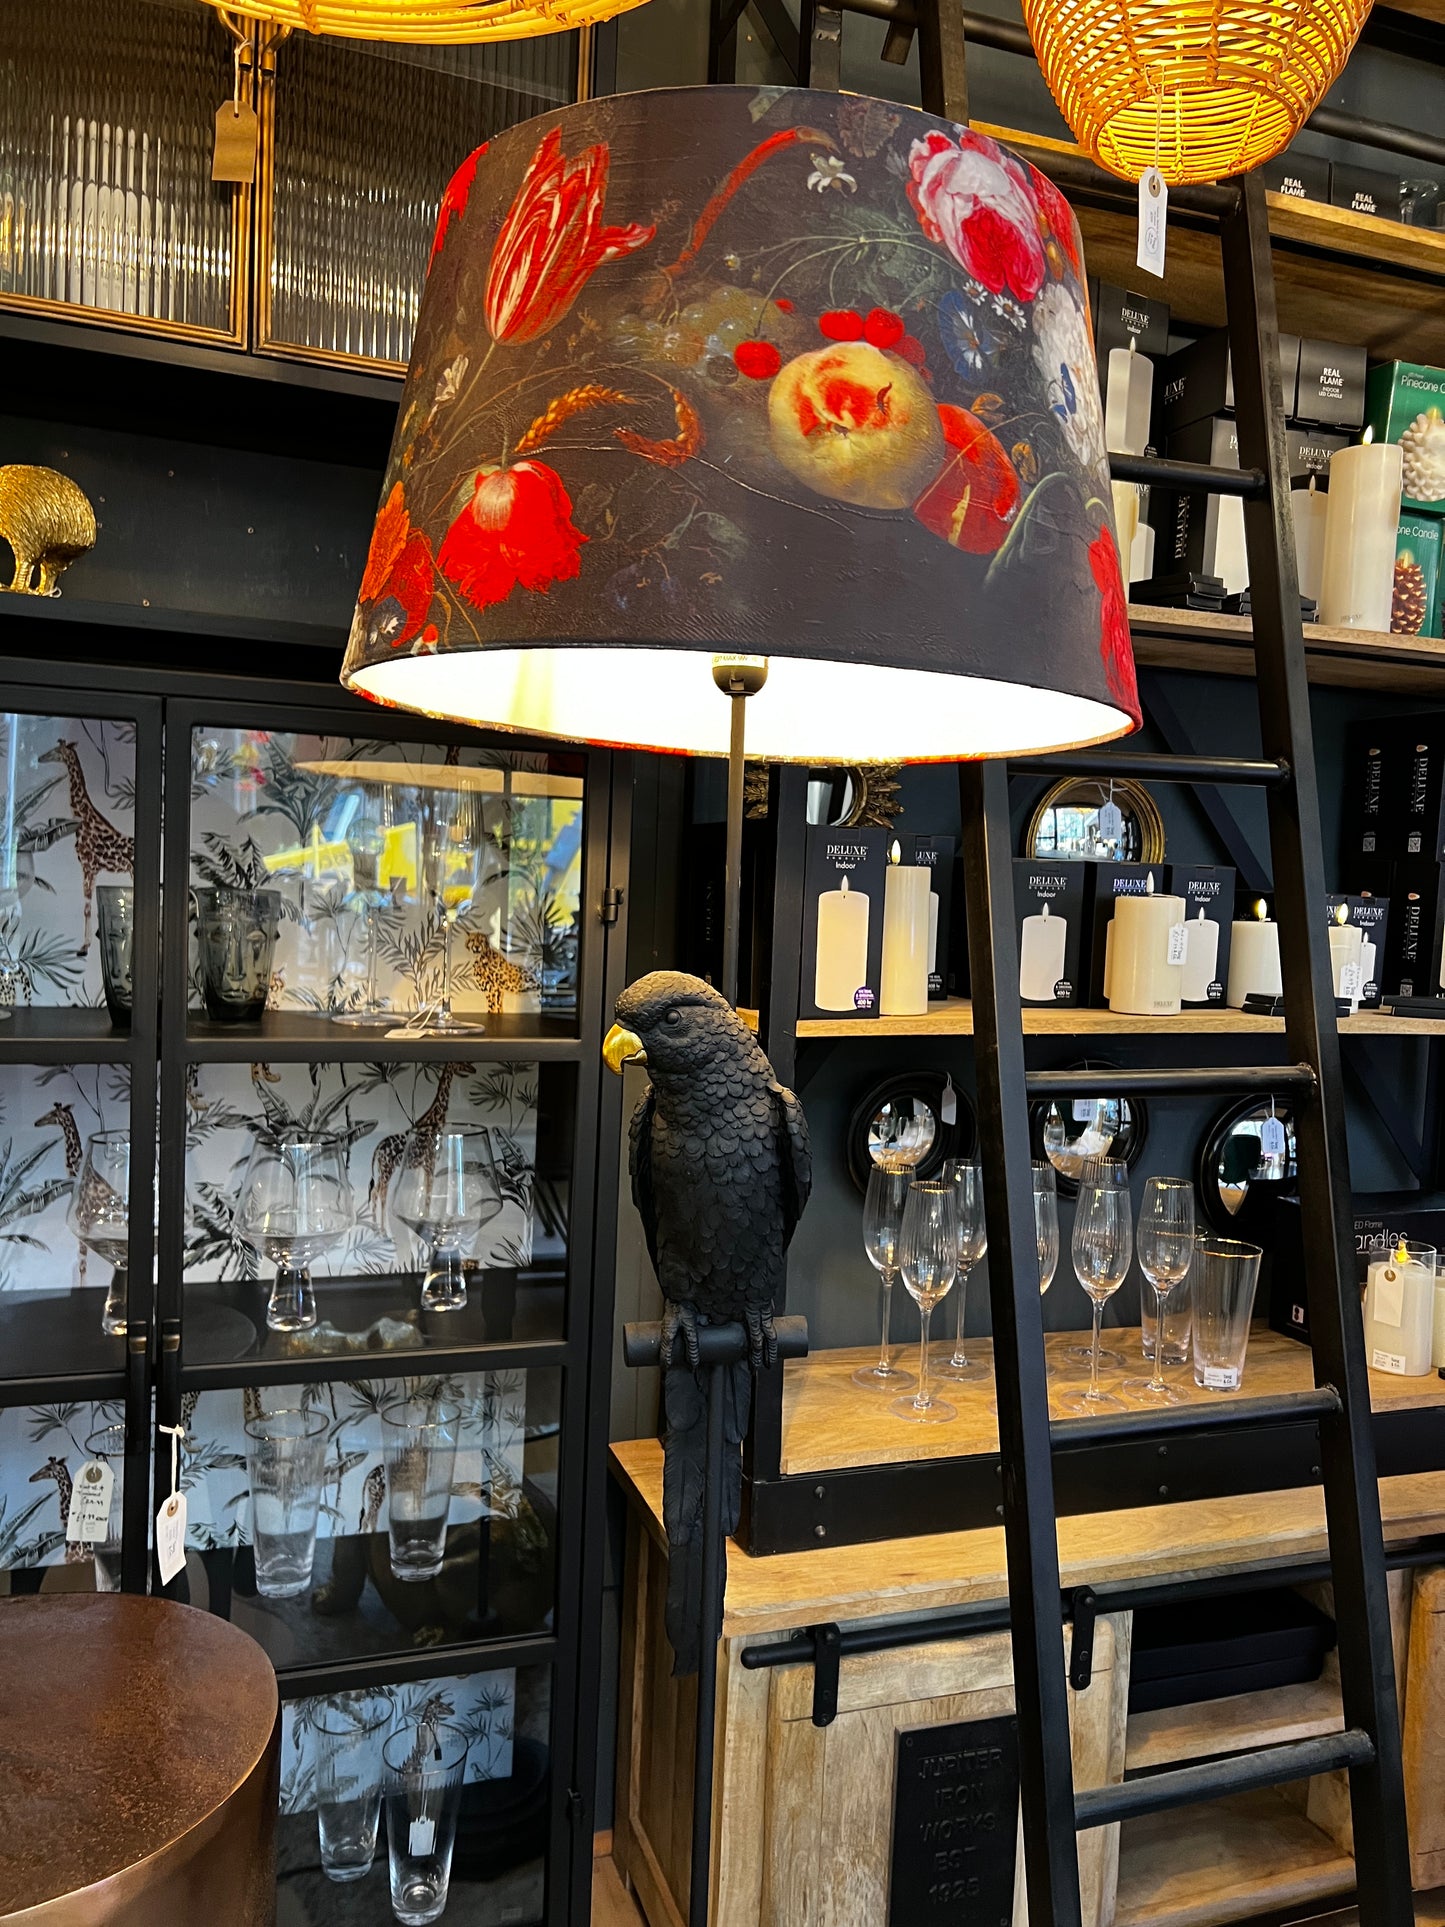 Matt Black Parrot Floor Lamp with Boho Floral Shade